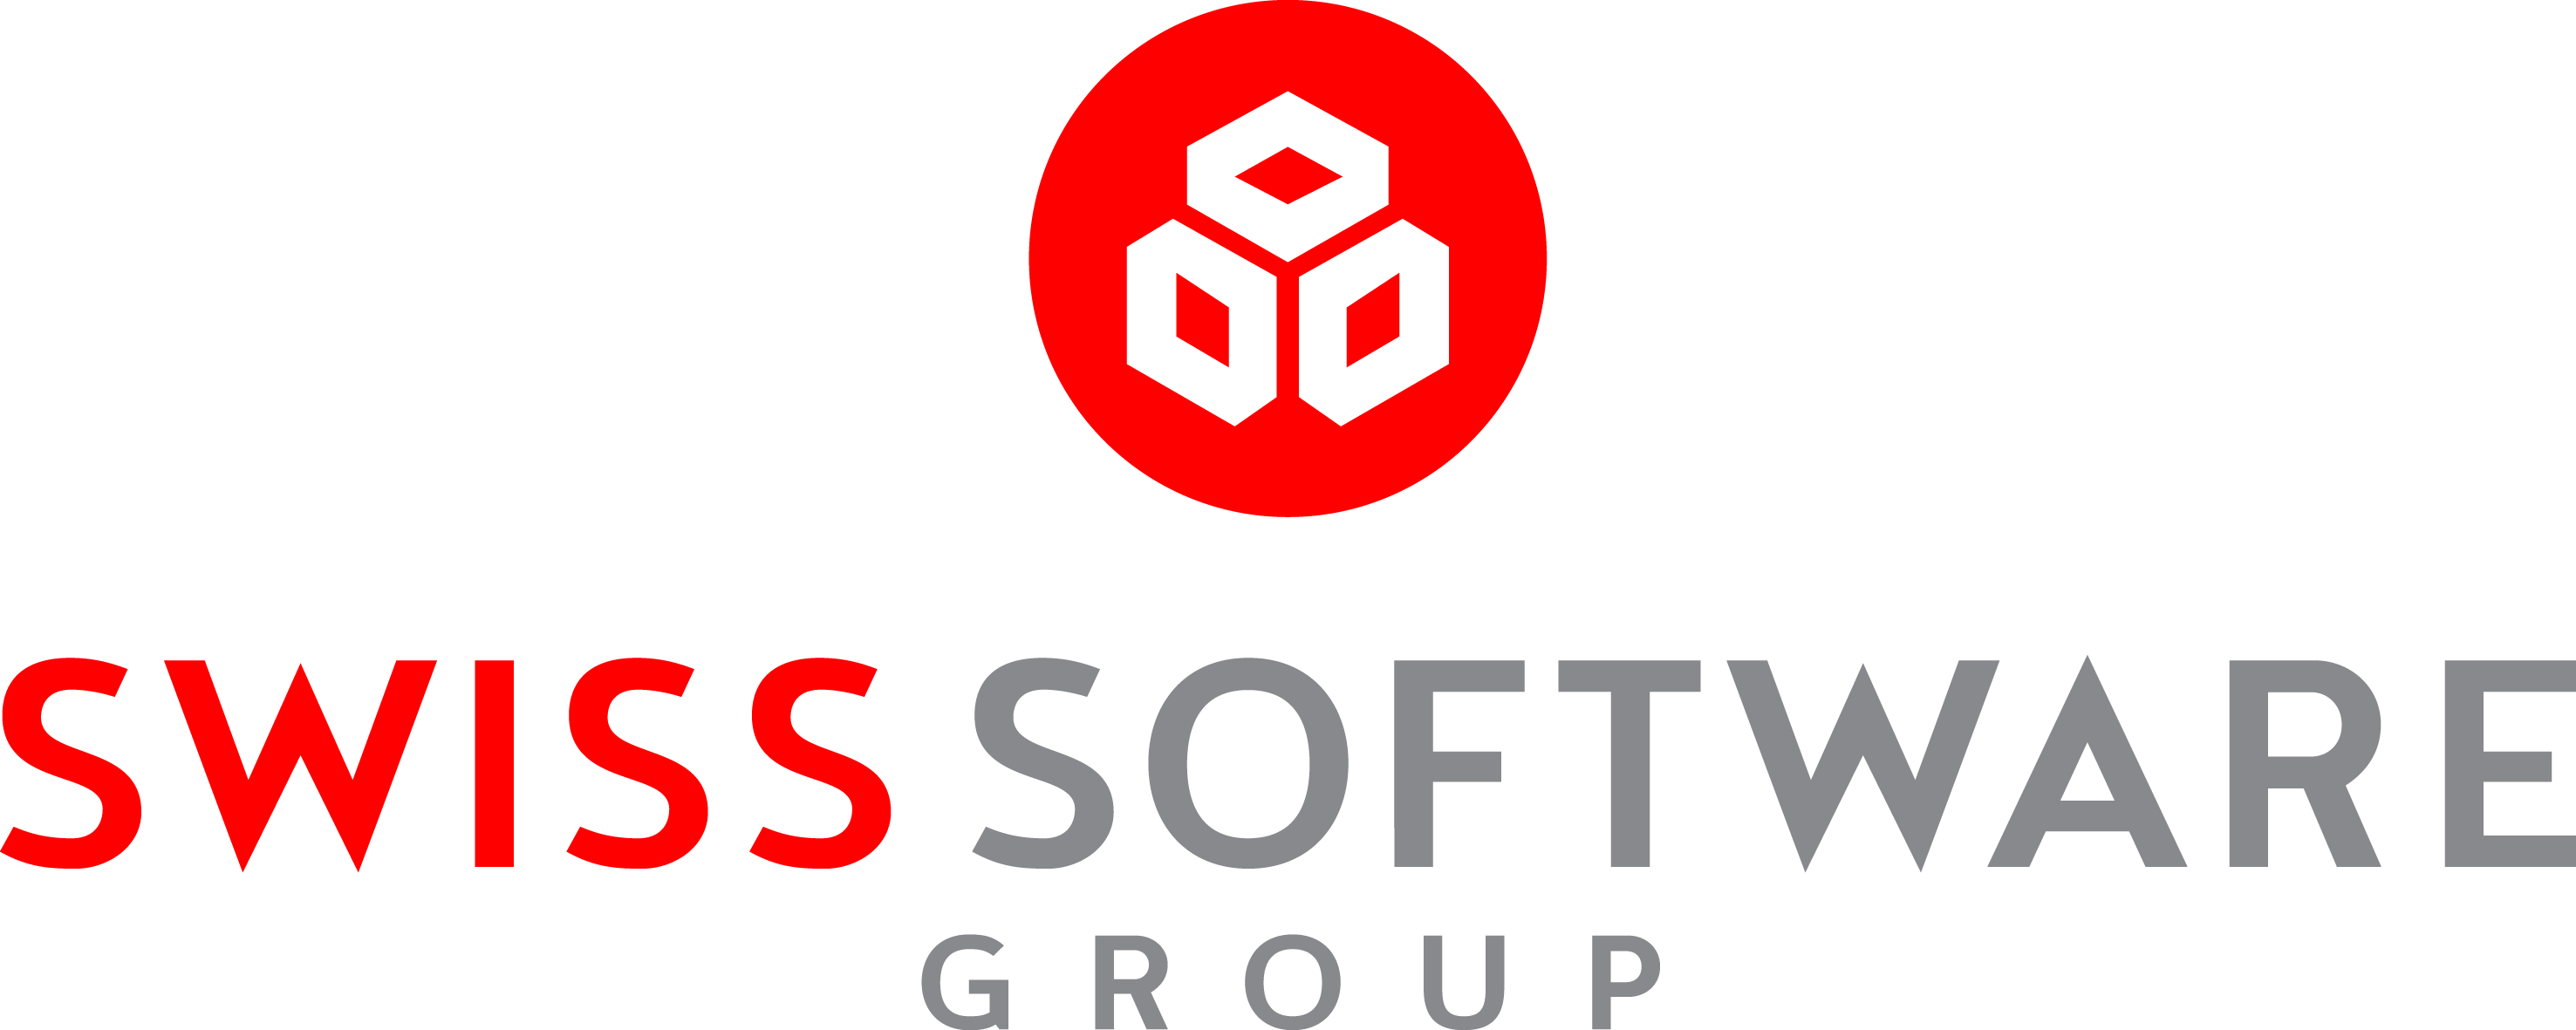 SwissSoftware.Group AG Logo